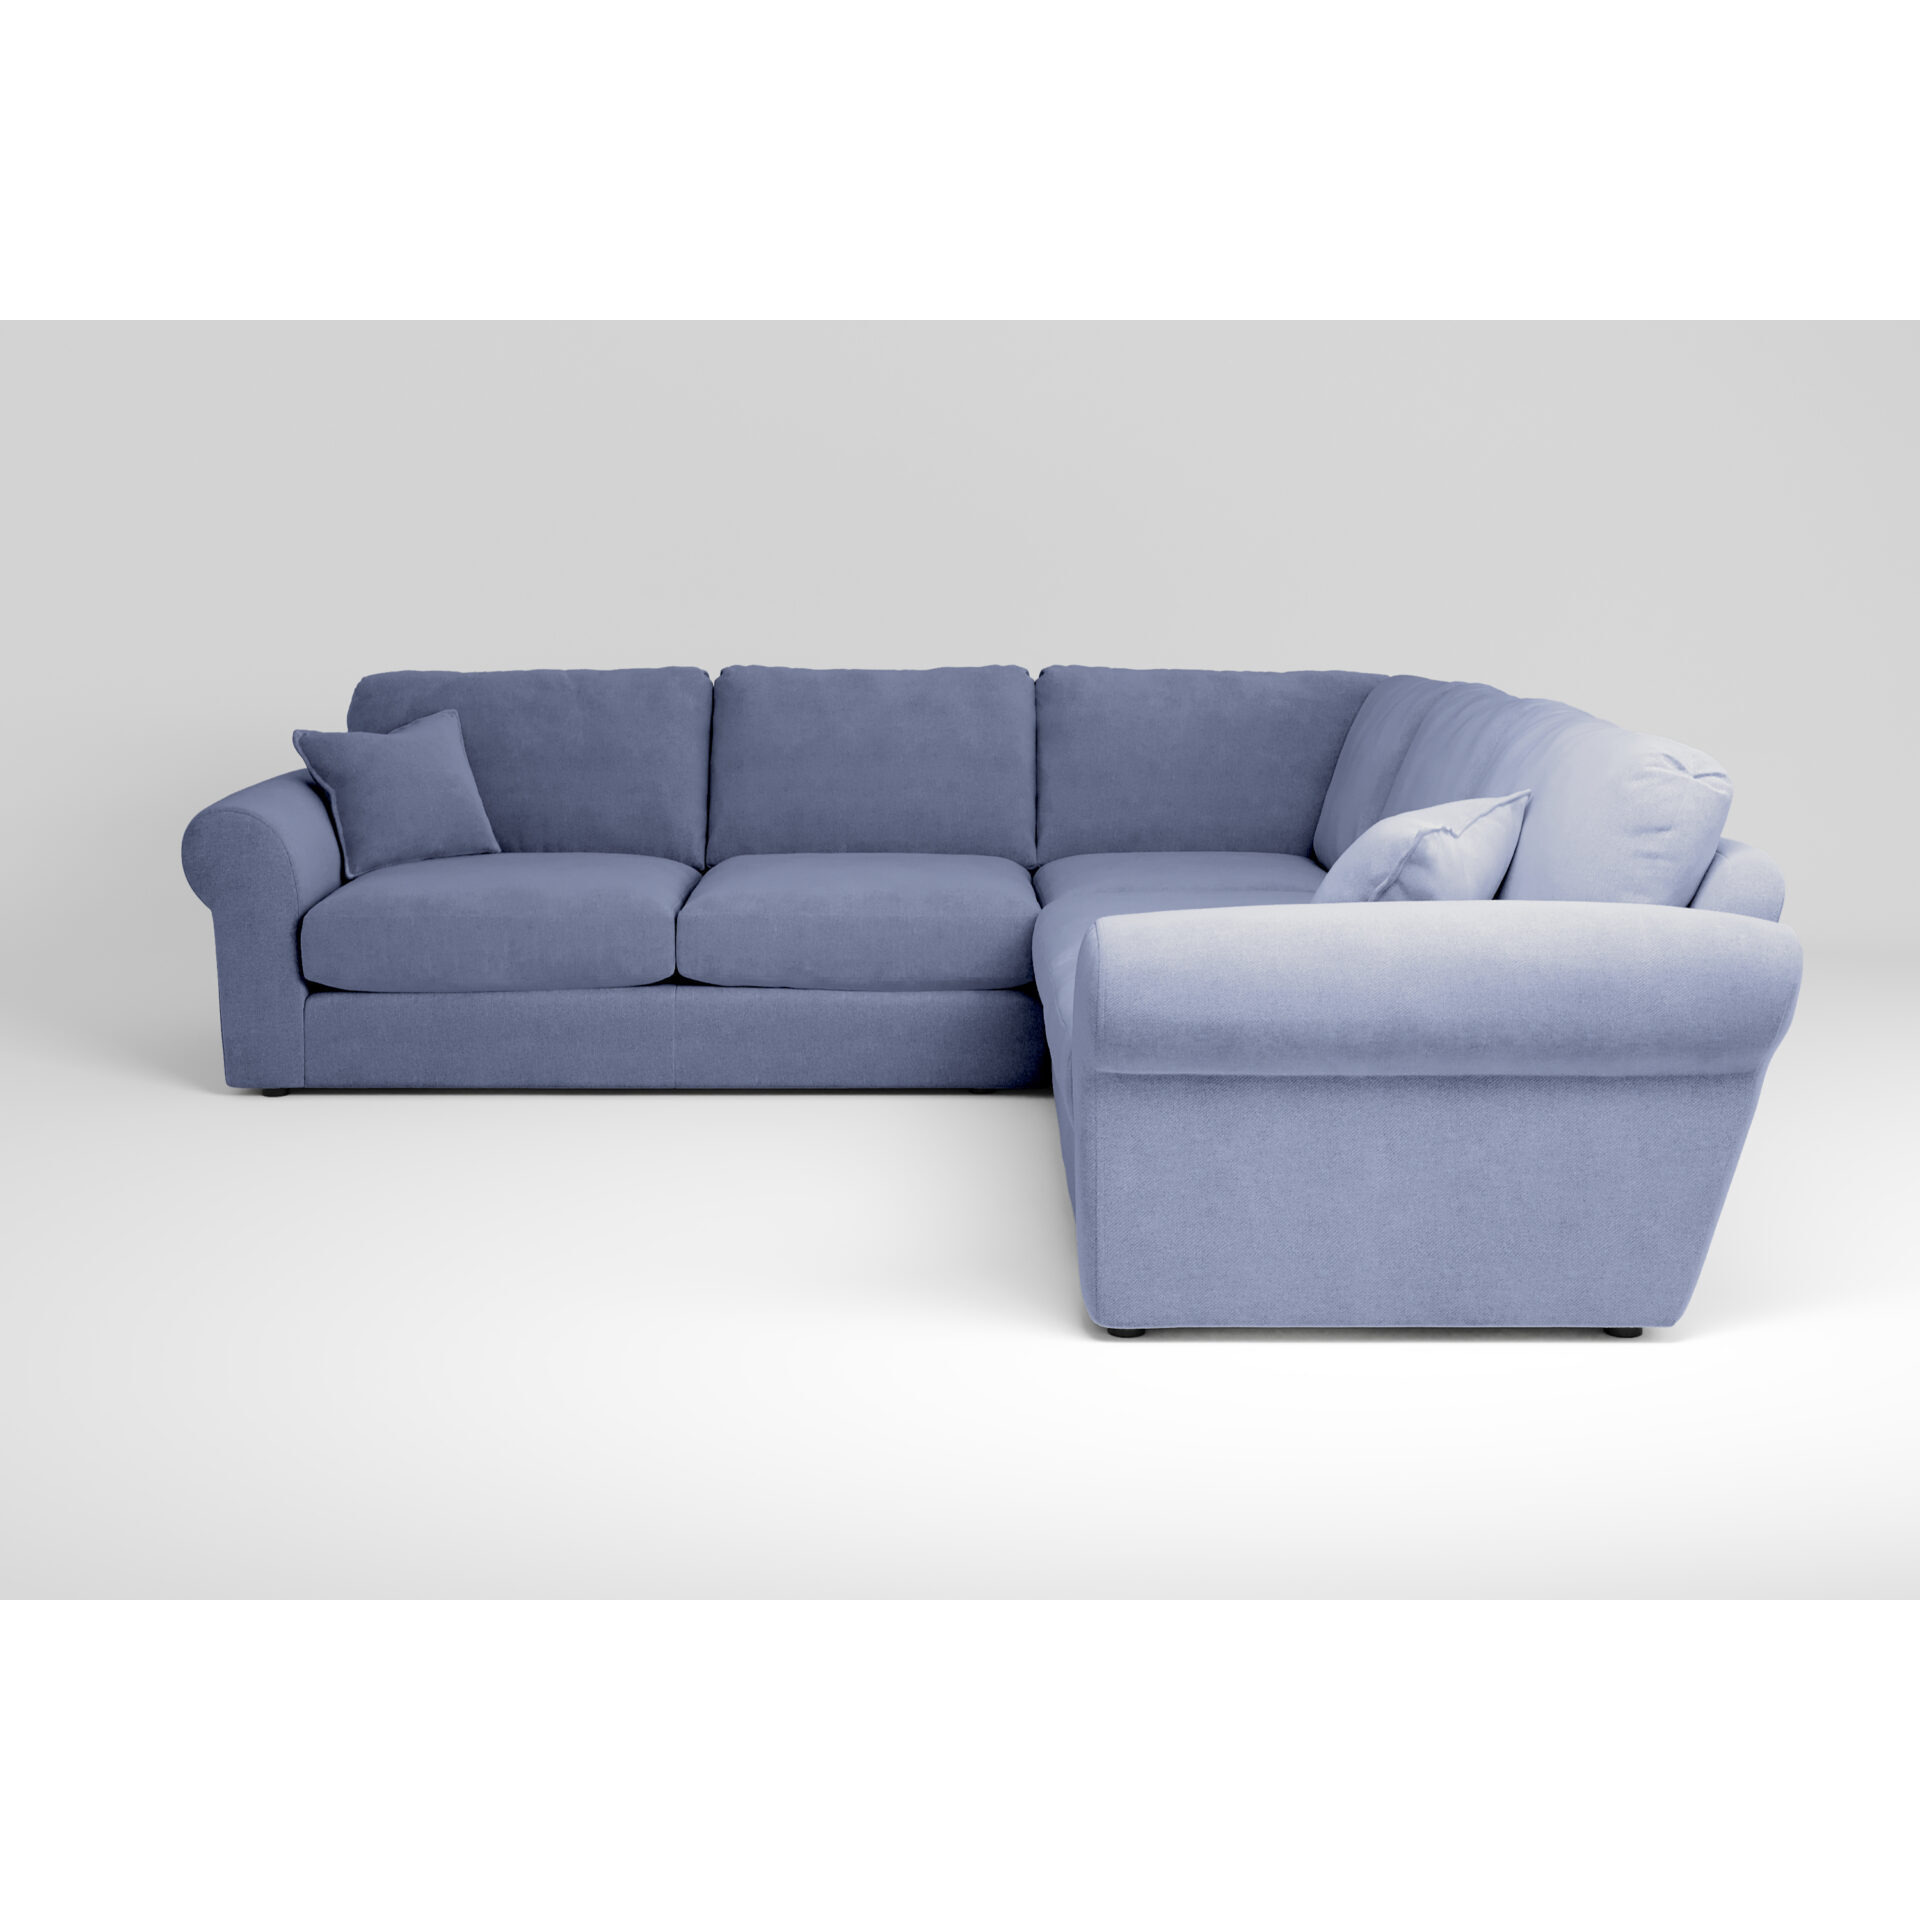 Mellow - Large Corner Sofa in Brushed Wool Feel Denim